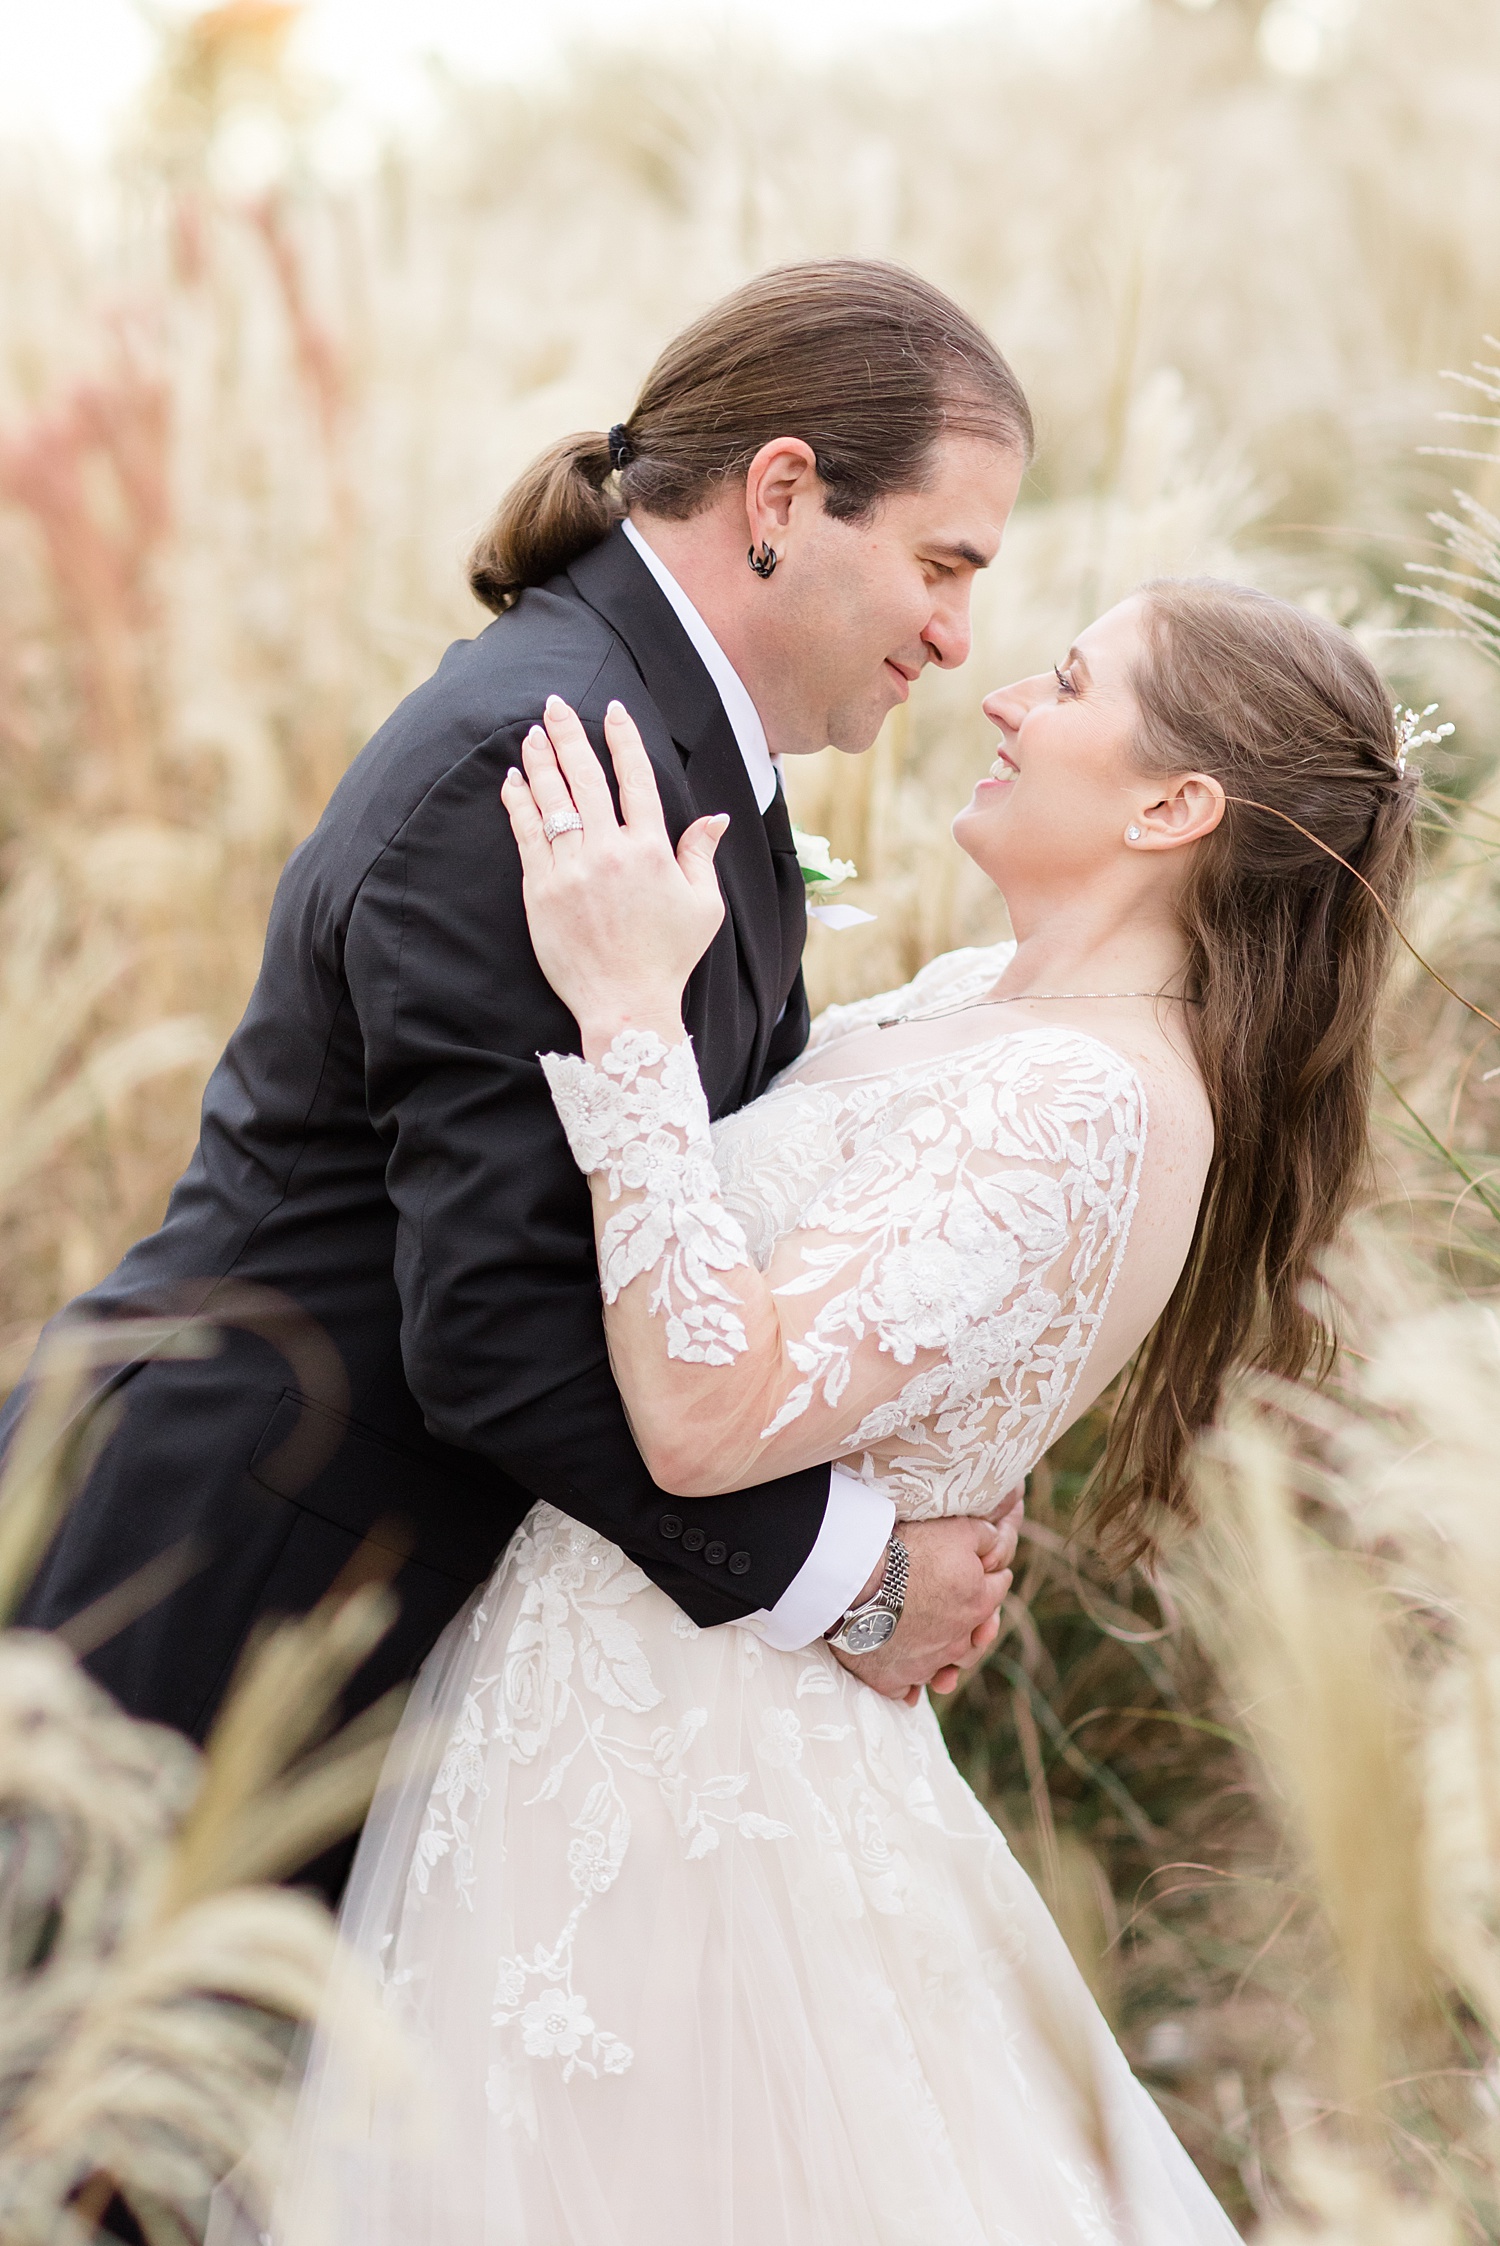 newlyweds in field of tall grass 